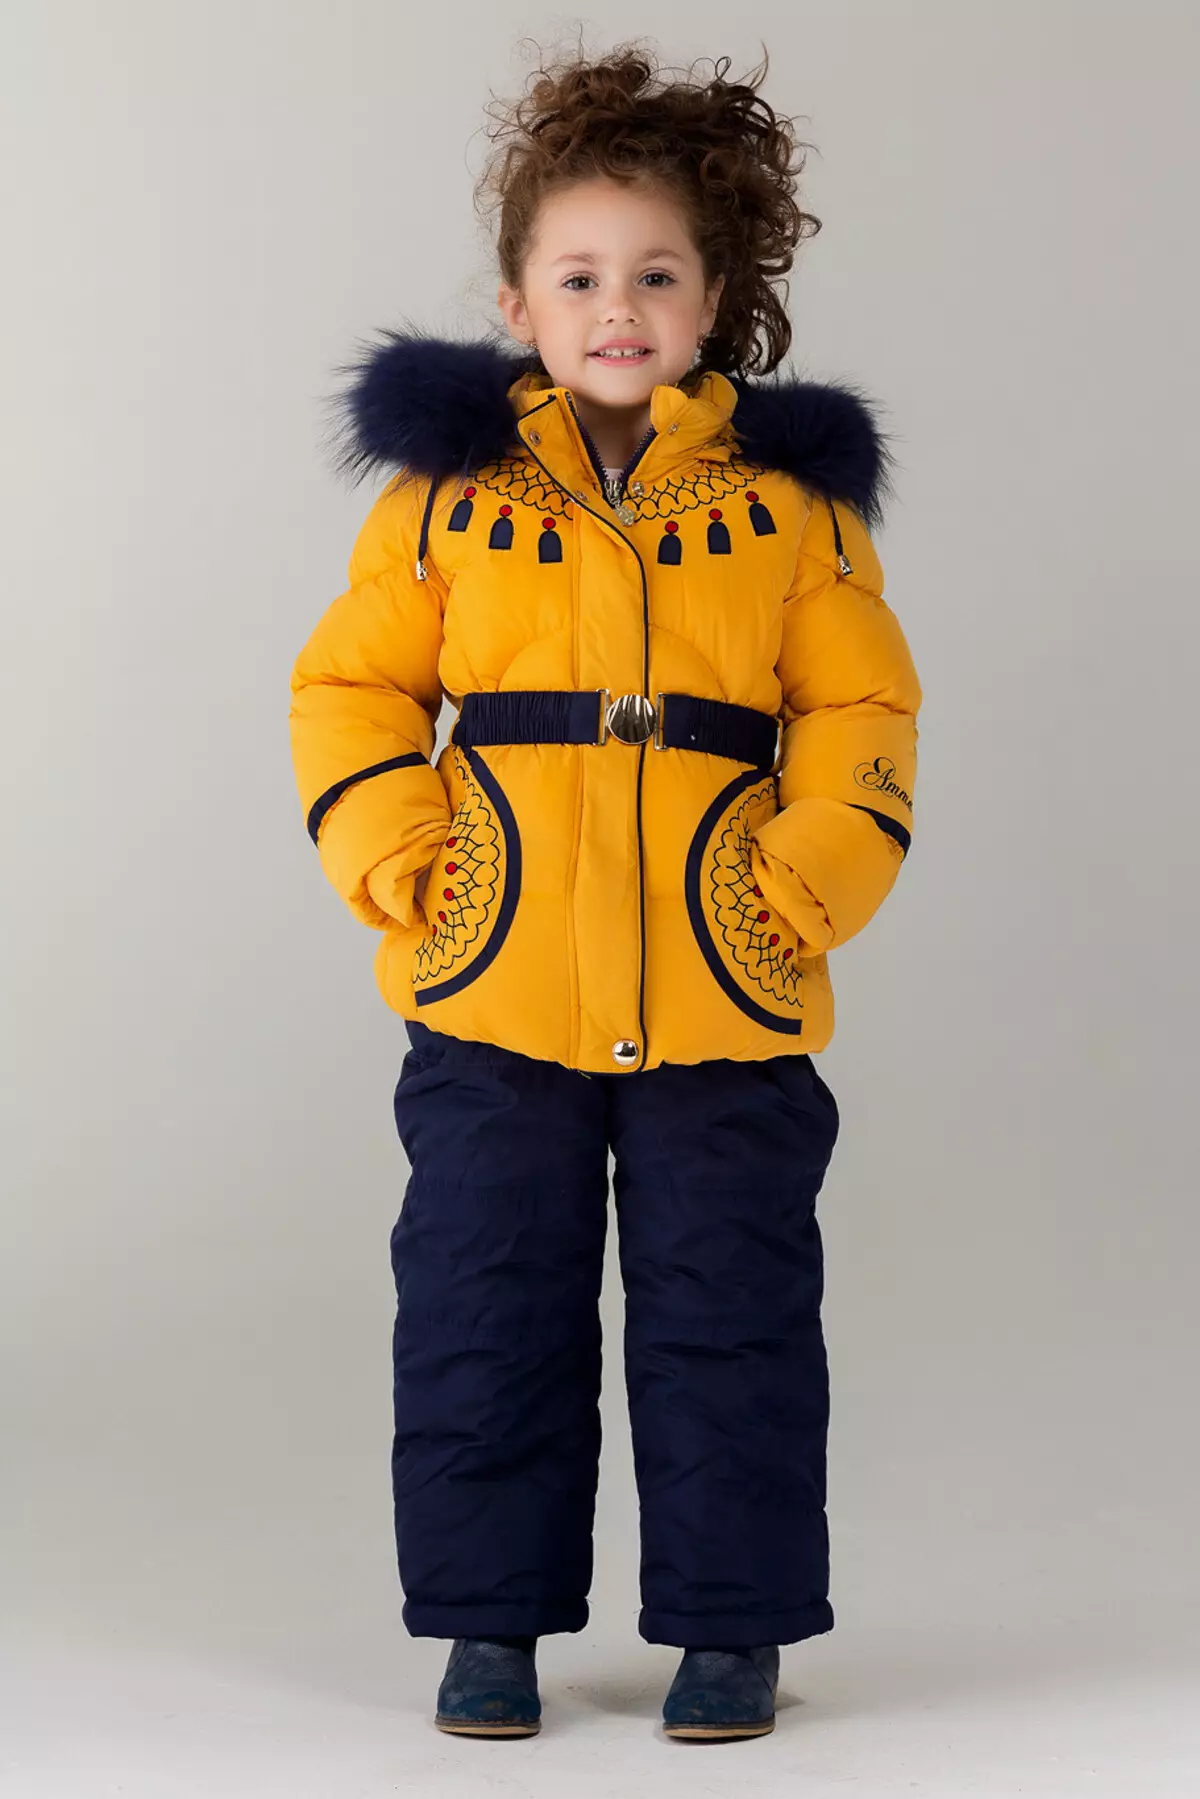 Bilemi (38 장의 사진) : 어린이 의류, 겨울 키트 및 바지, 레인 코트 및 재킷, 브랜드 리뷰 3802_15